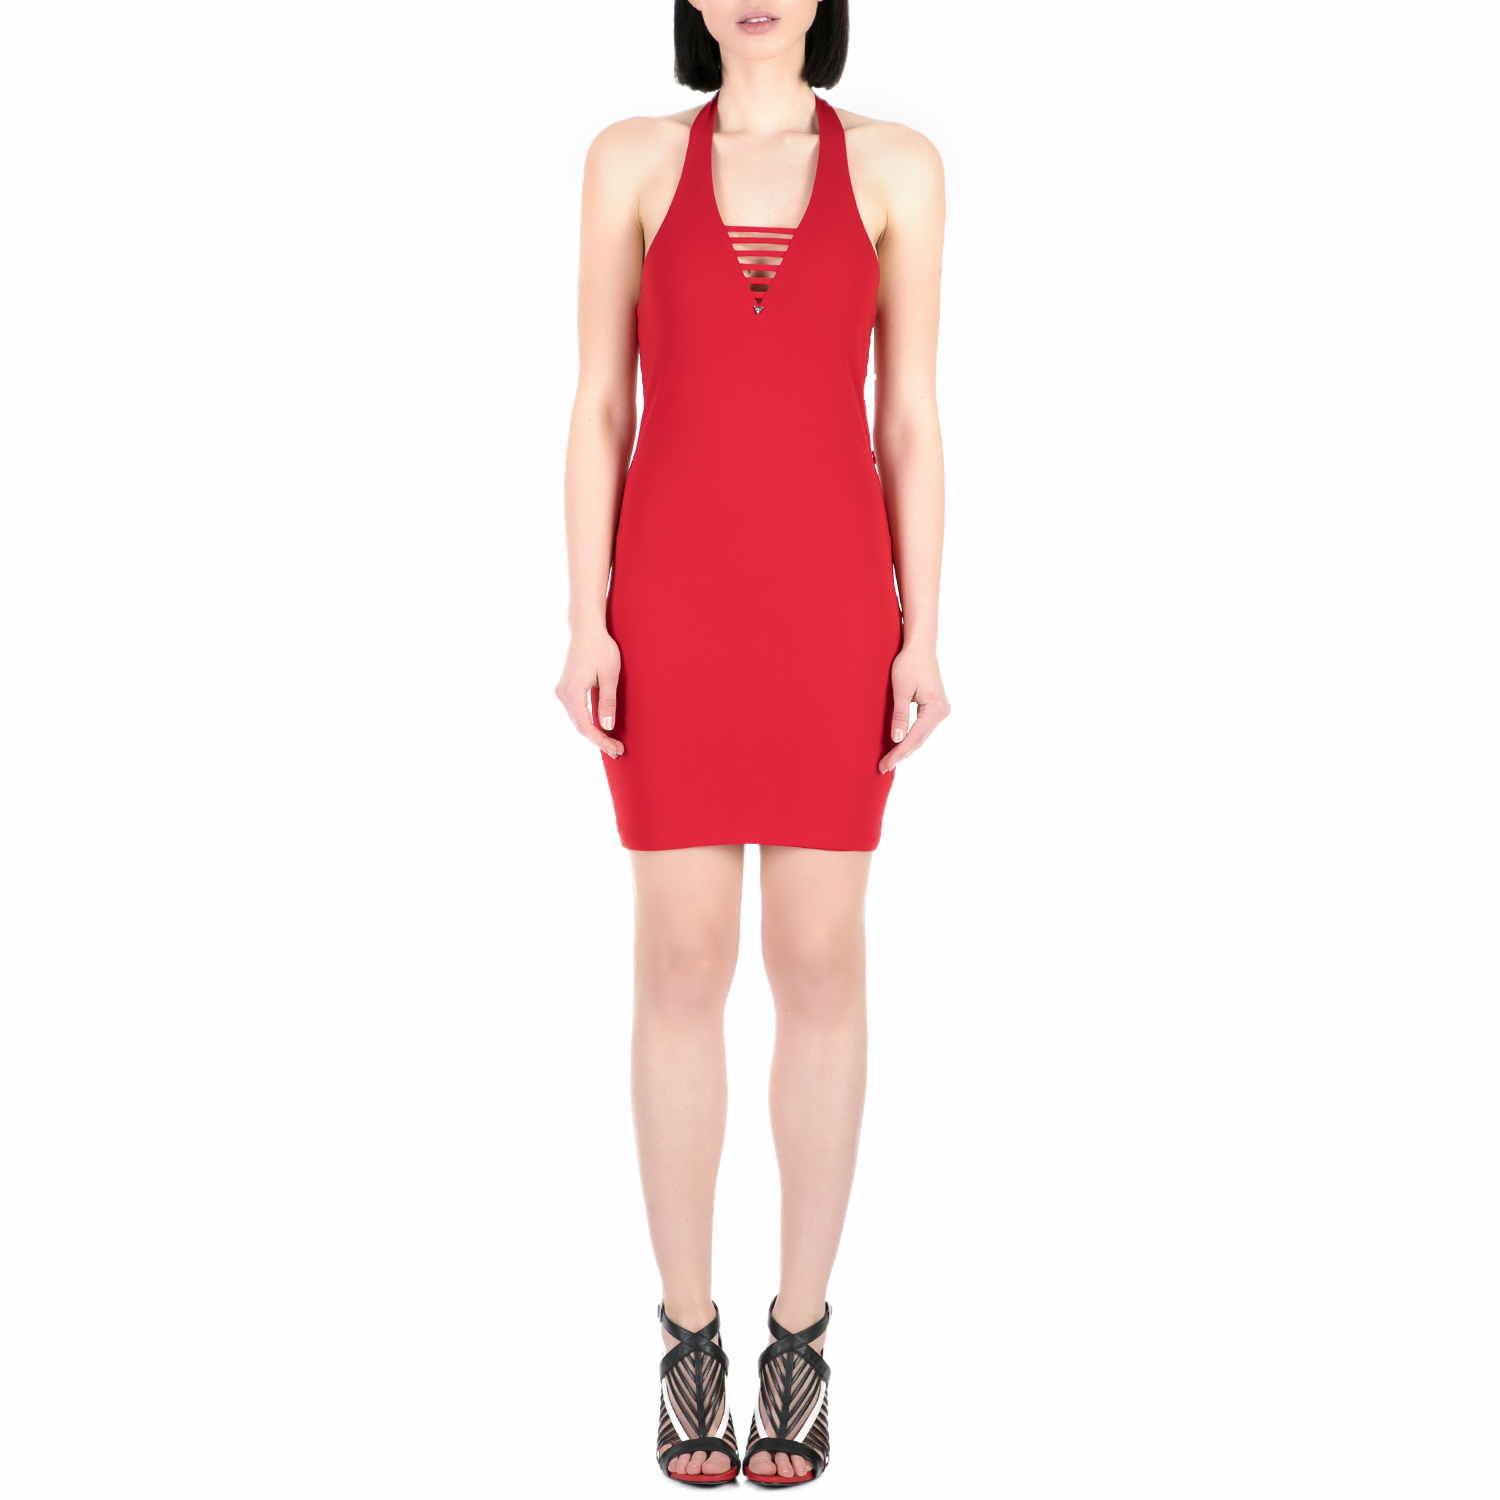 GUESS - Γυναικείο μίνι φόρεμα Guess DALIA κόκκινο Γυναικεία/Ρούχα/Φορέματα/Μίνι